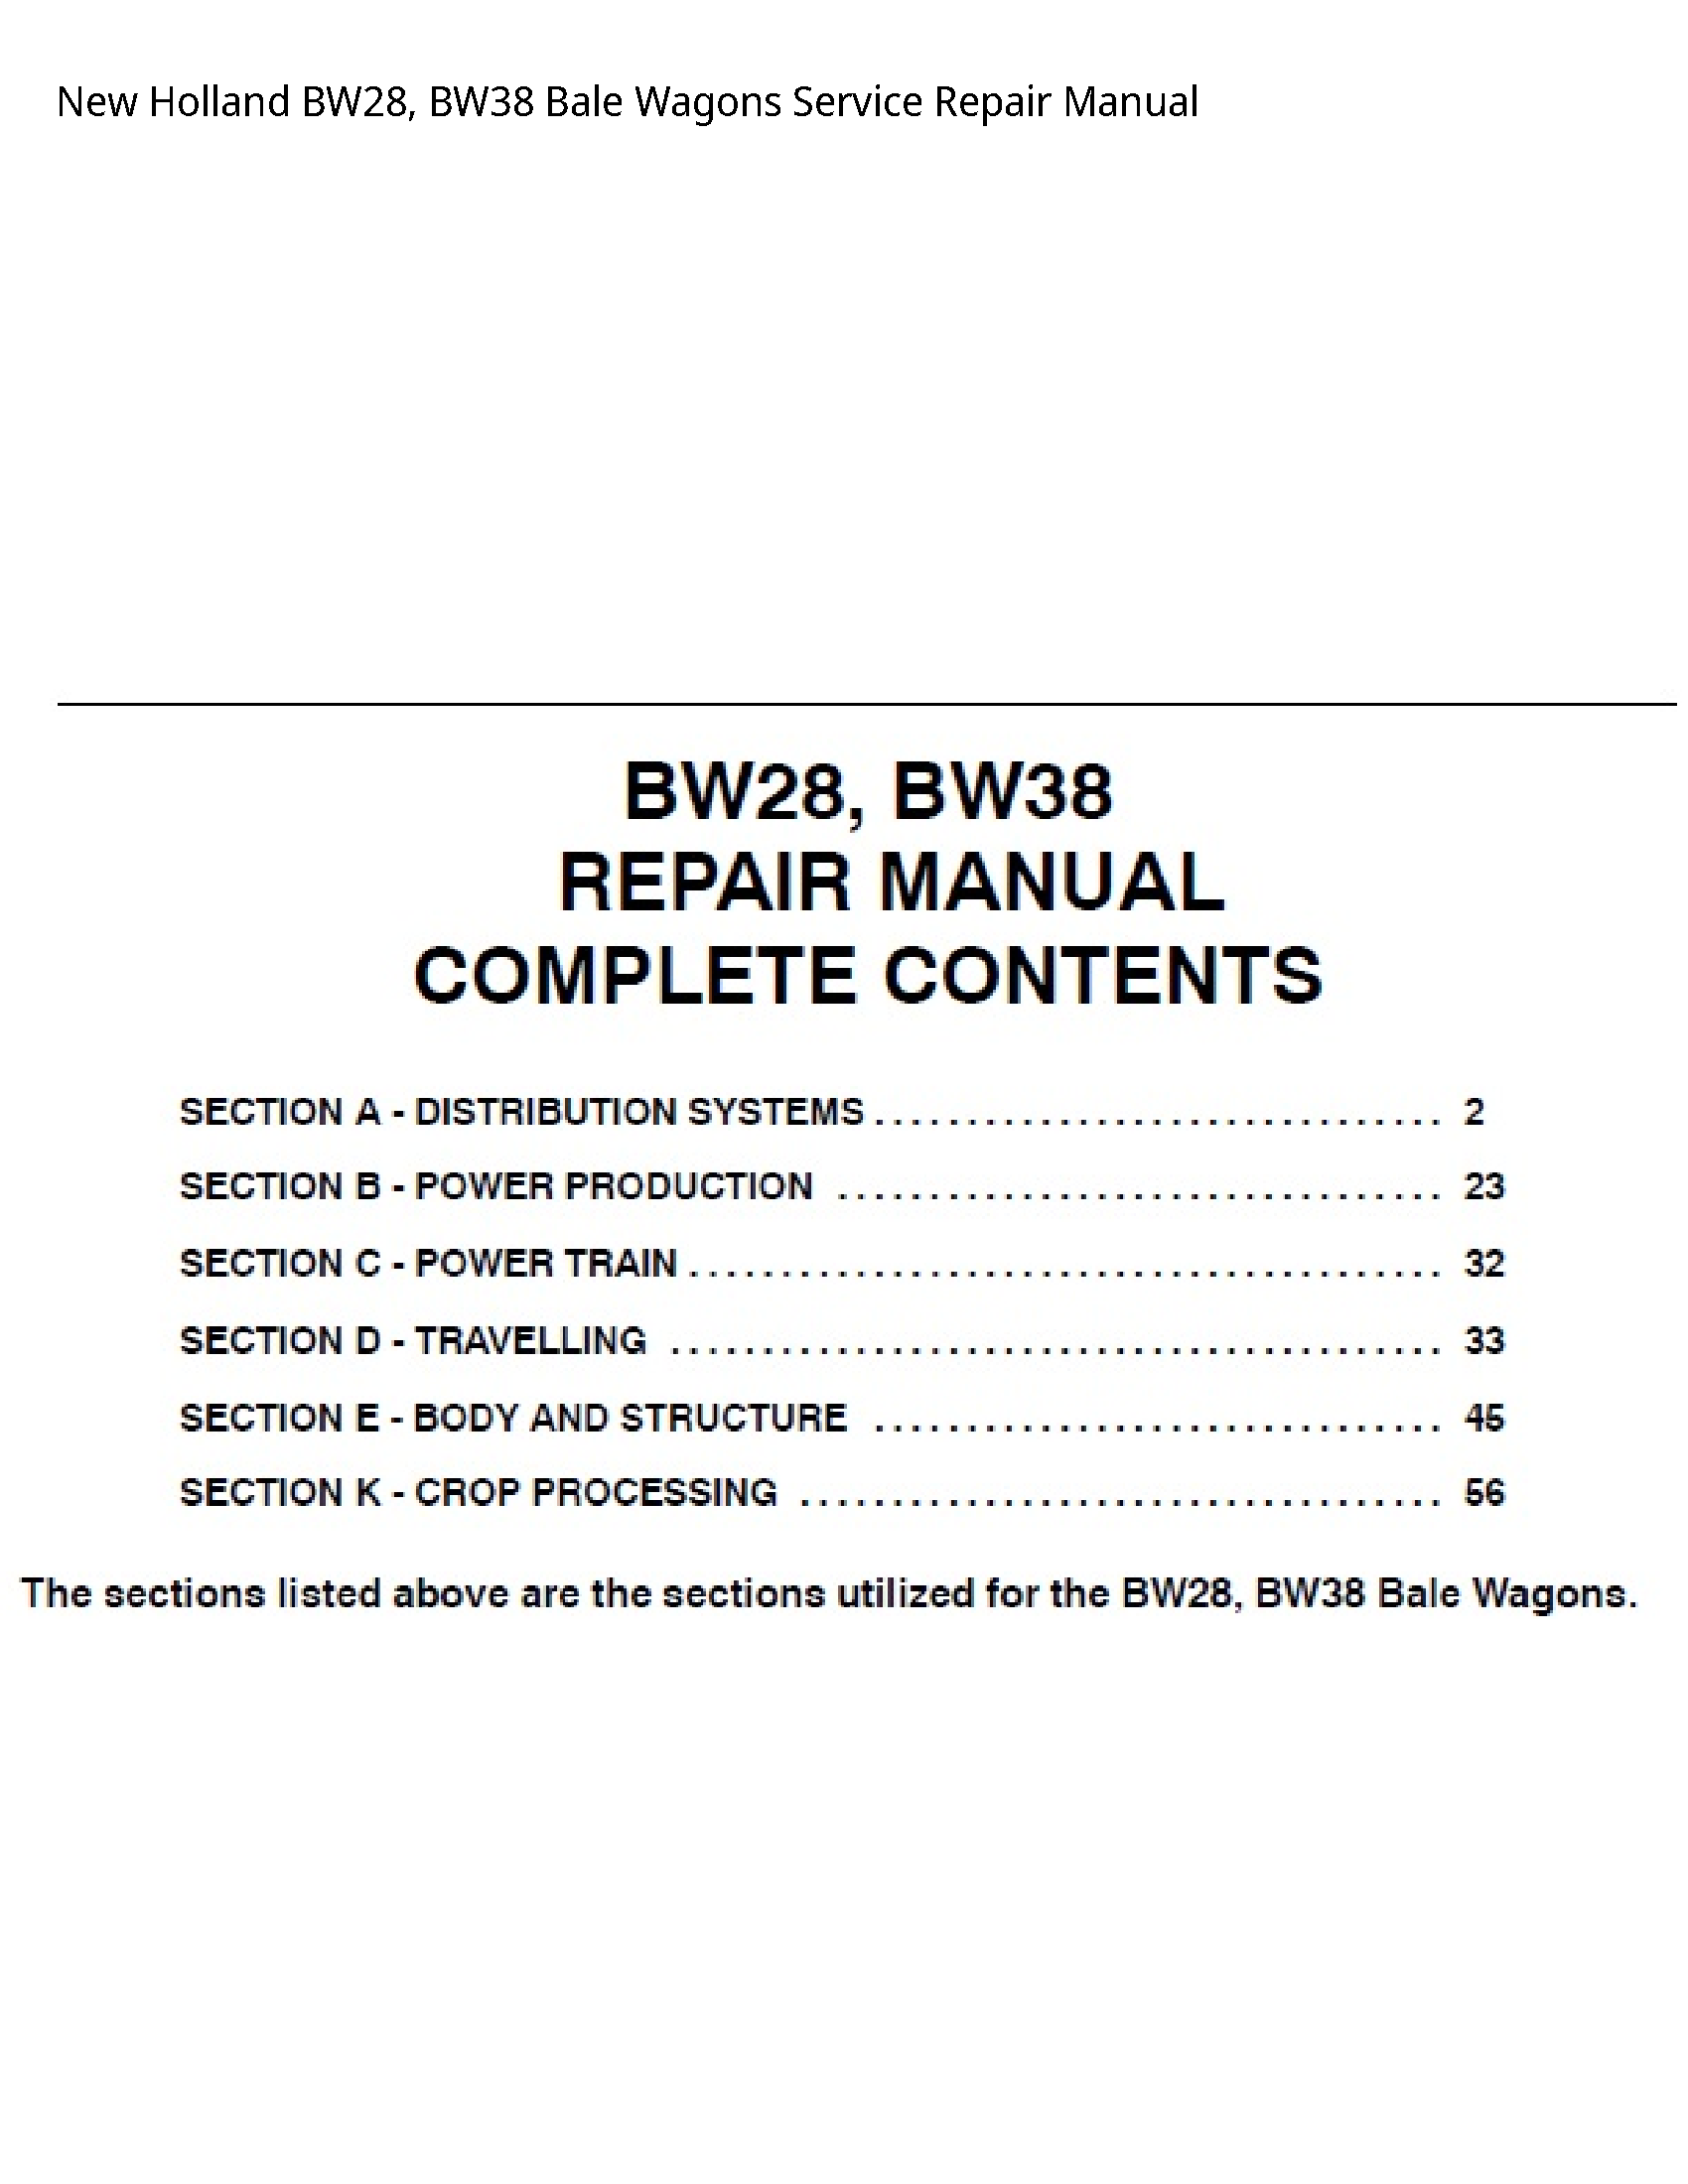 New Holland BW28 Bale Wagons manual